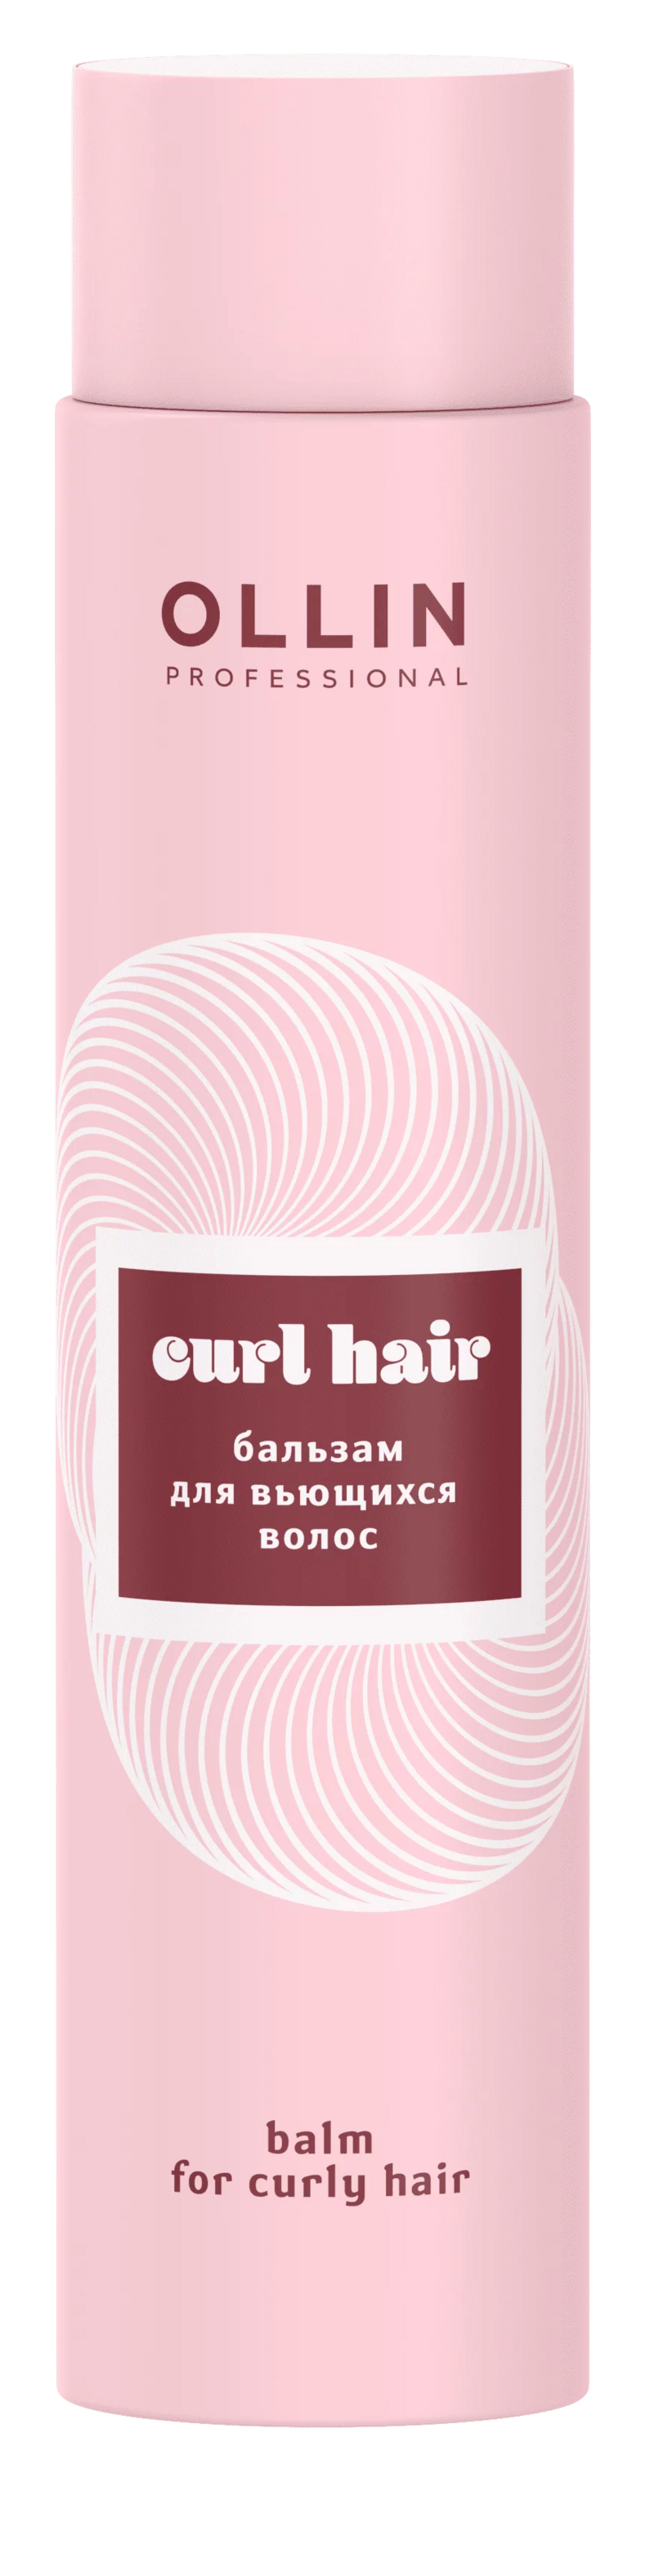 OLLIN CURL HAIR Бальзам для вьющихся волос 300мл / Balm for curly hair